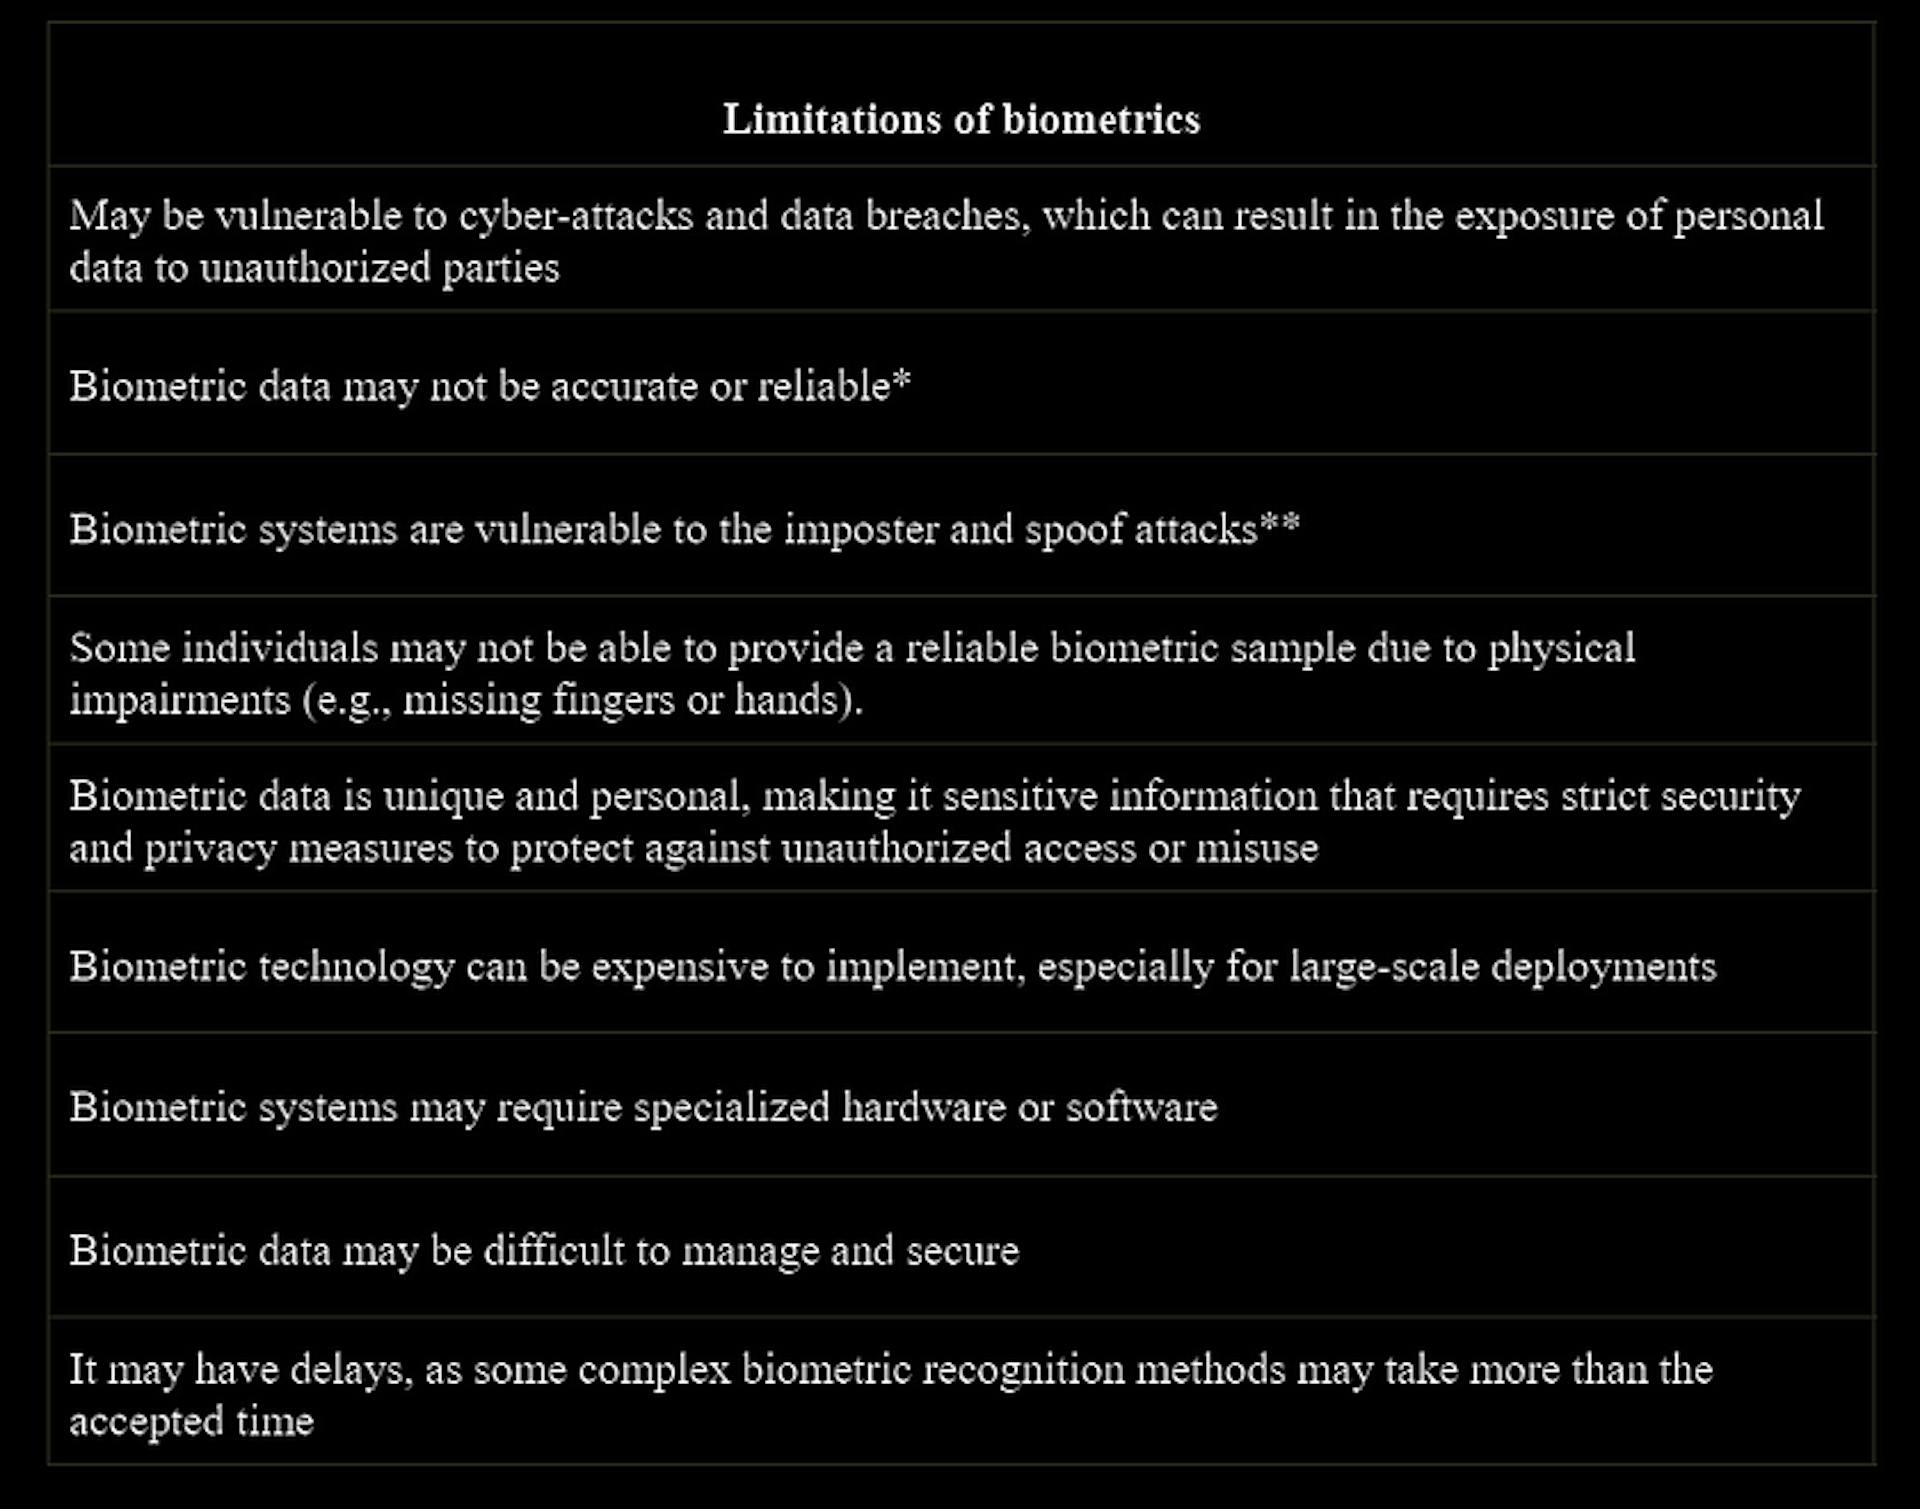 Table 10. Limitations of biometrics.